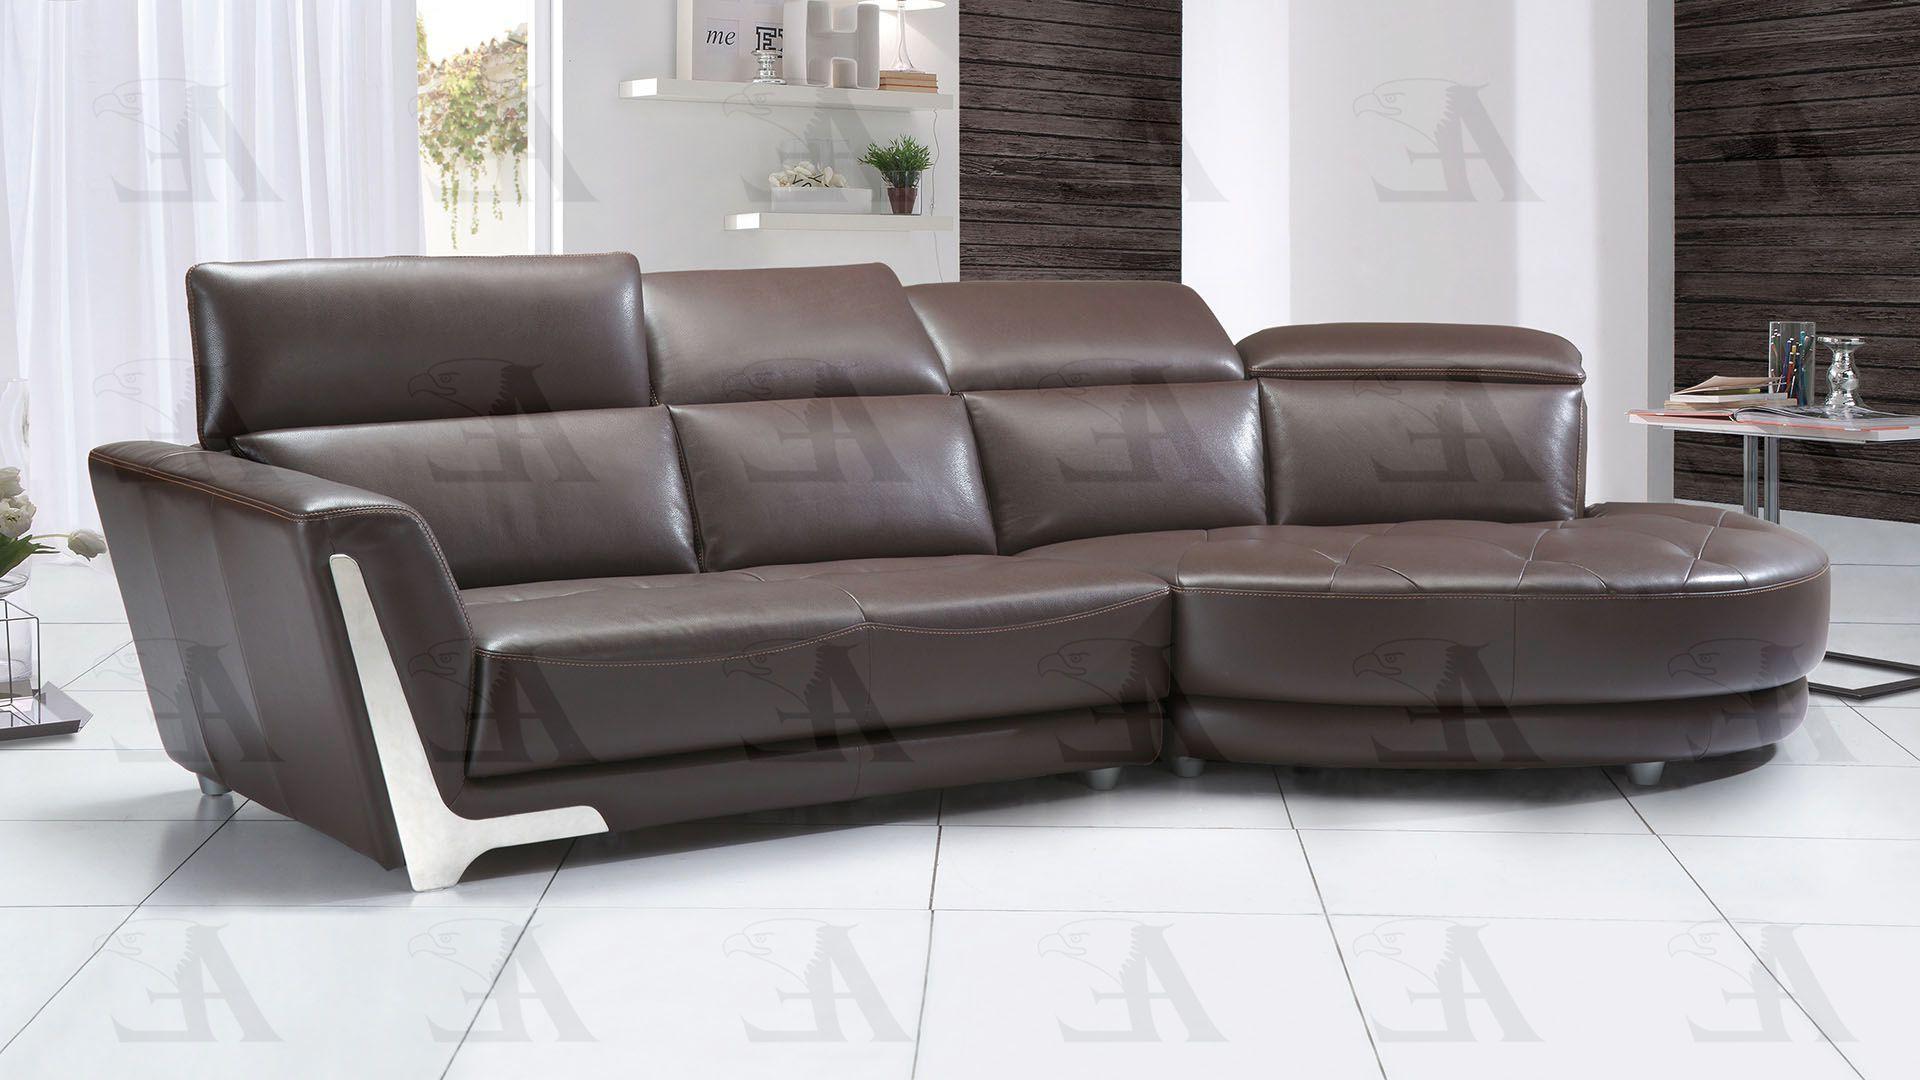 

    
American Eagle Furniture EK-L696-DB Dark Brown Sofa and Chaise LHC Italian Leather 2Pcs
